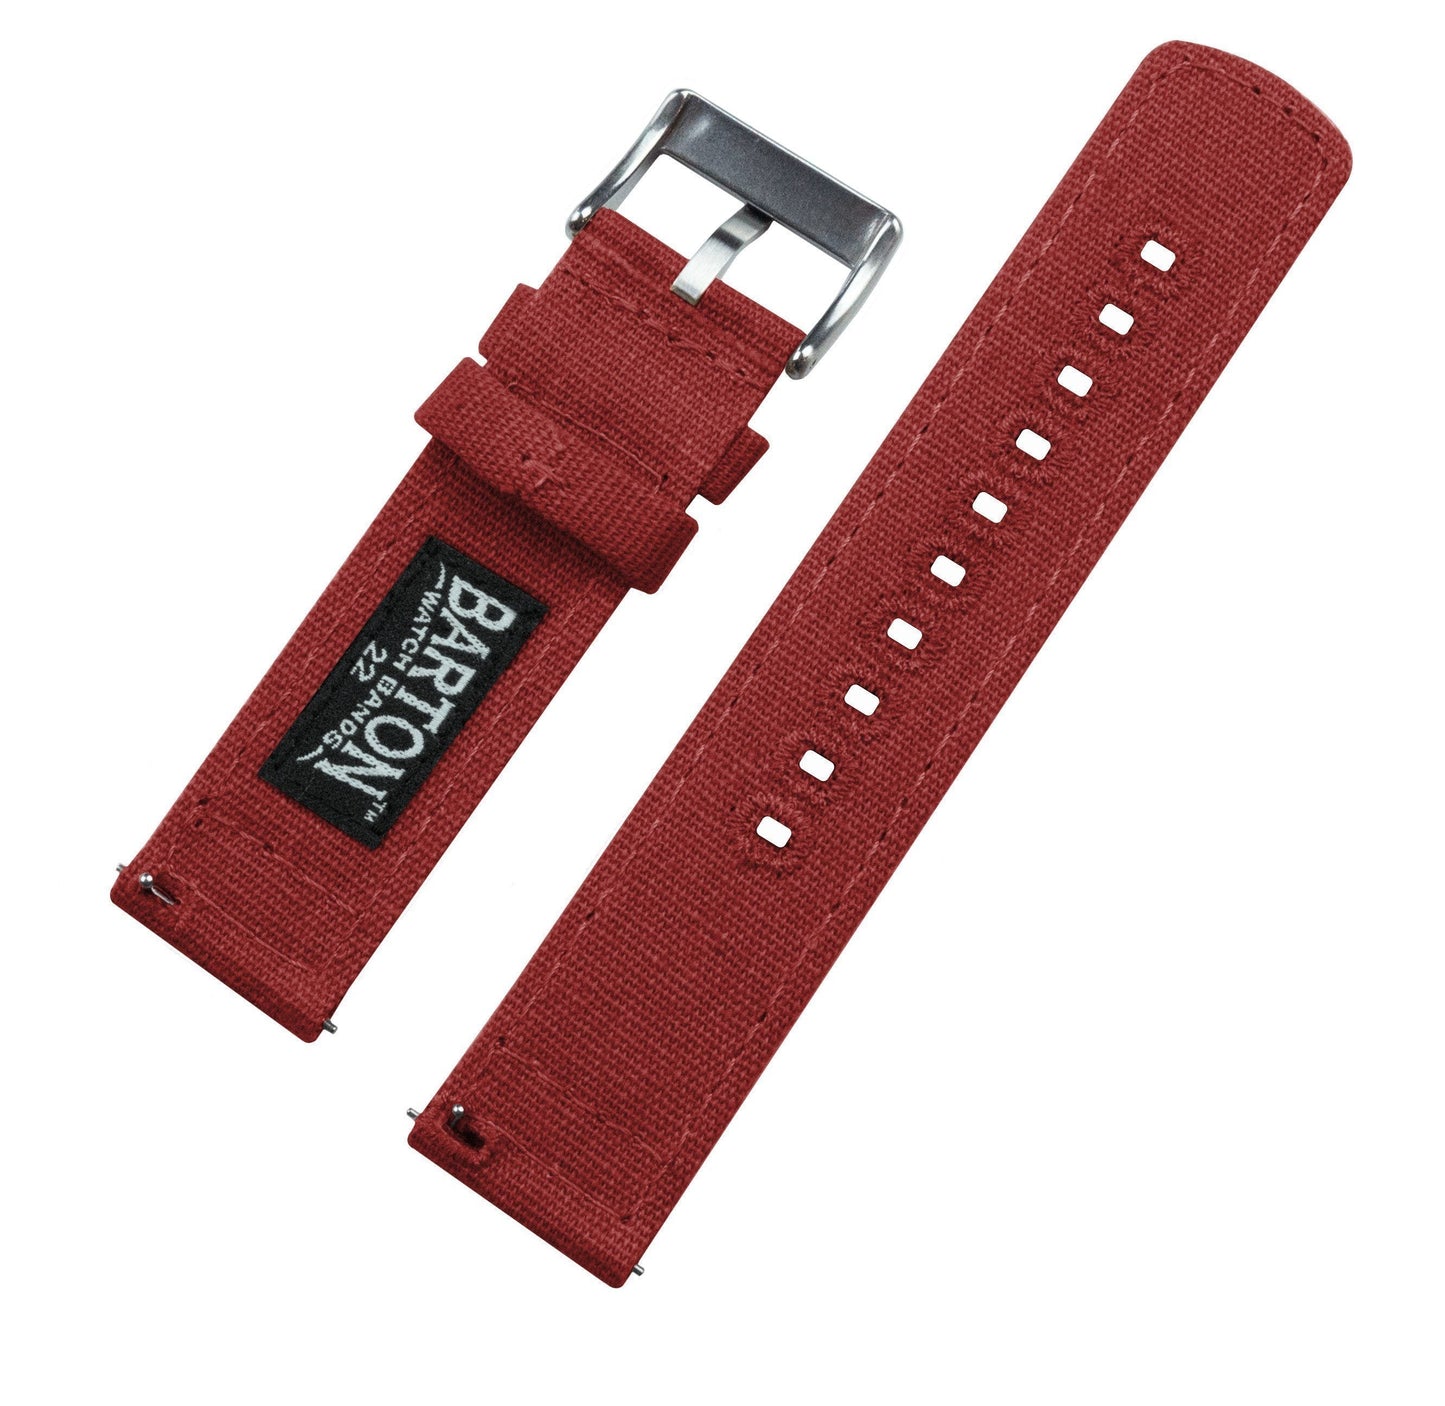 Crimson Red Premium Canvas Watch Band by Barton Watch Bands